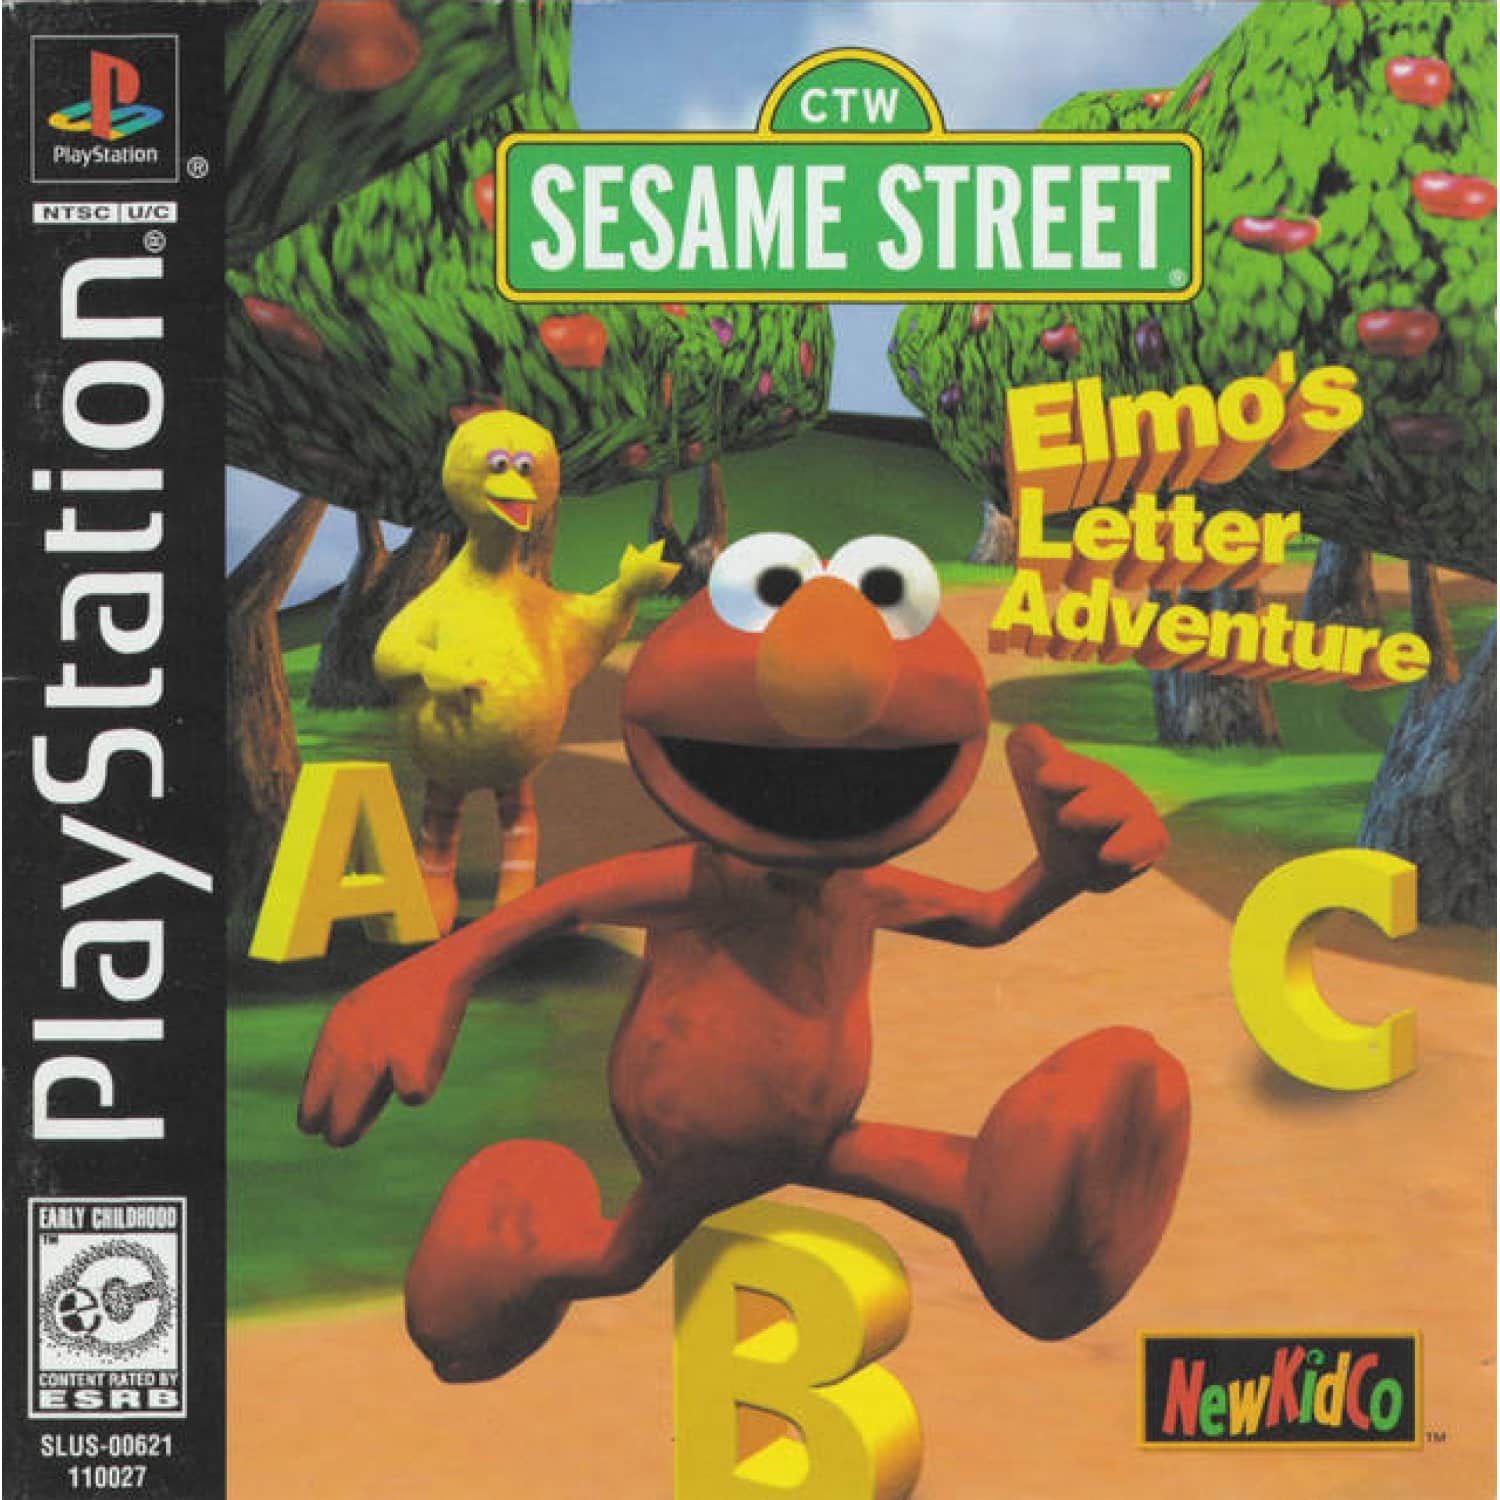 Sesame Street: Elmo’s Letter Adventure player count stats